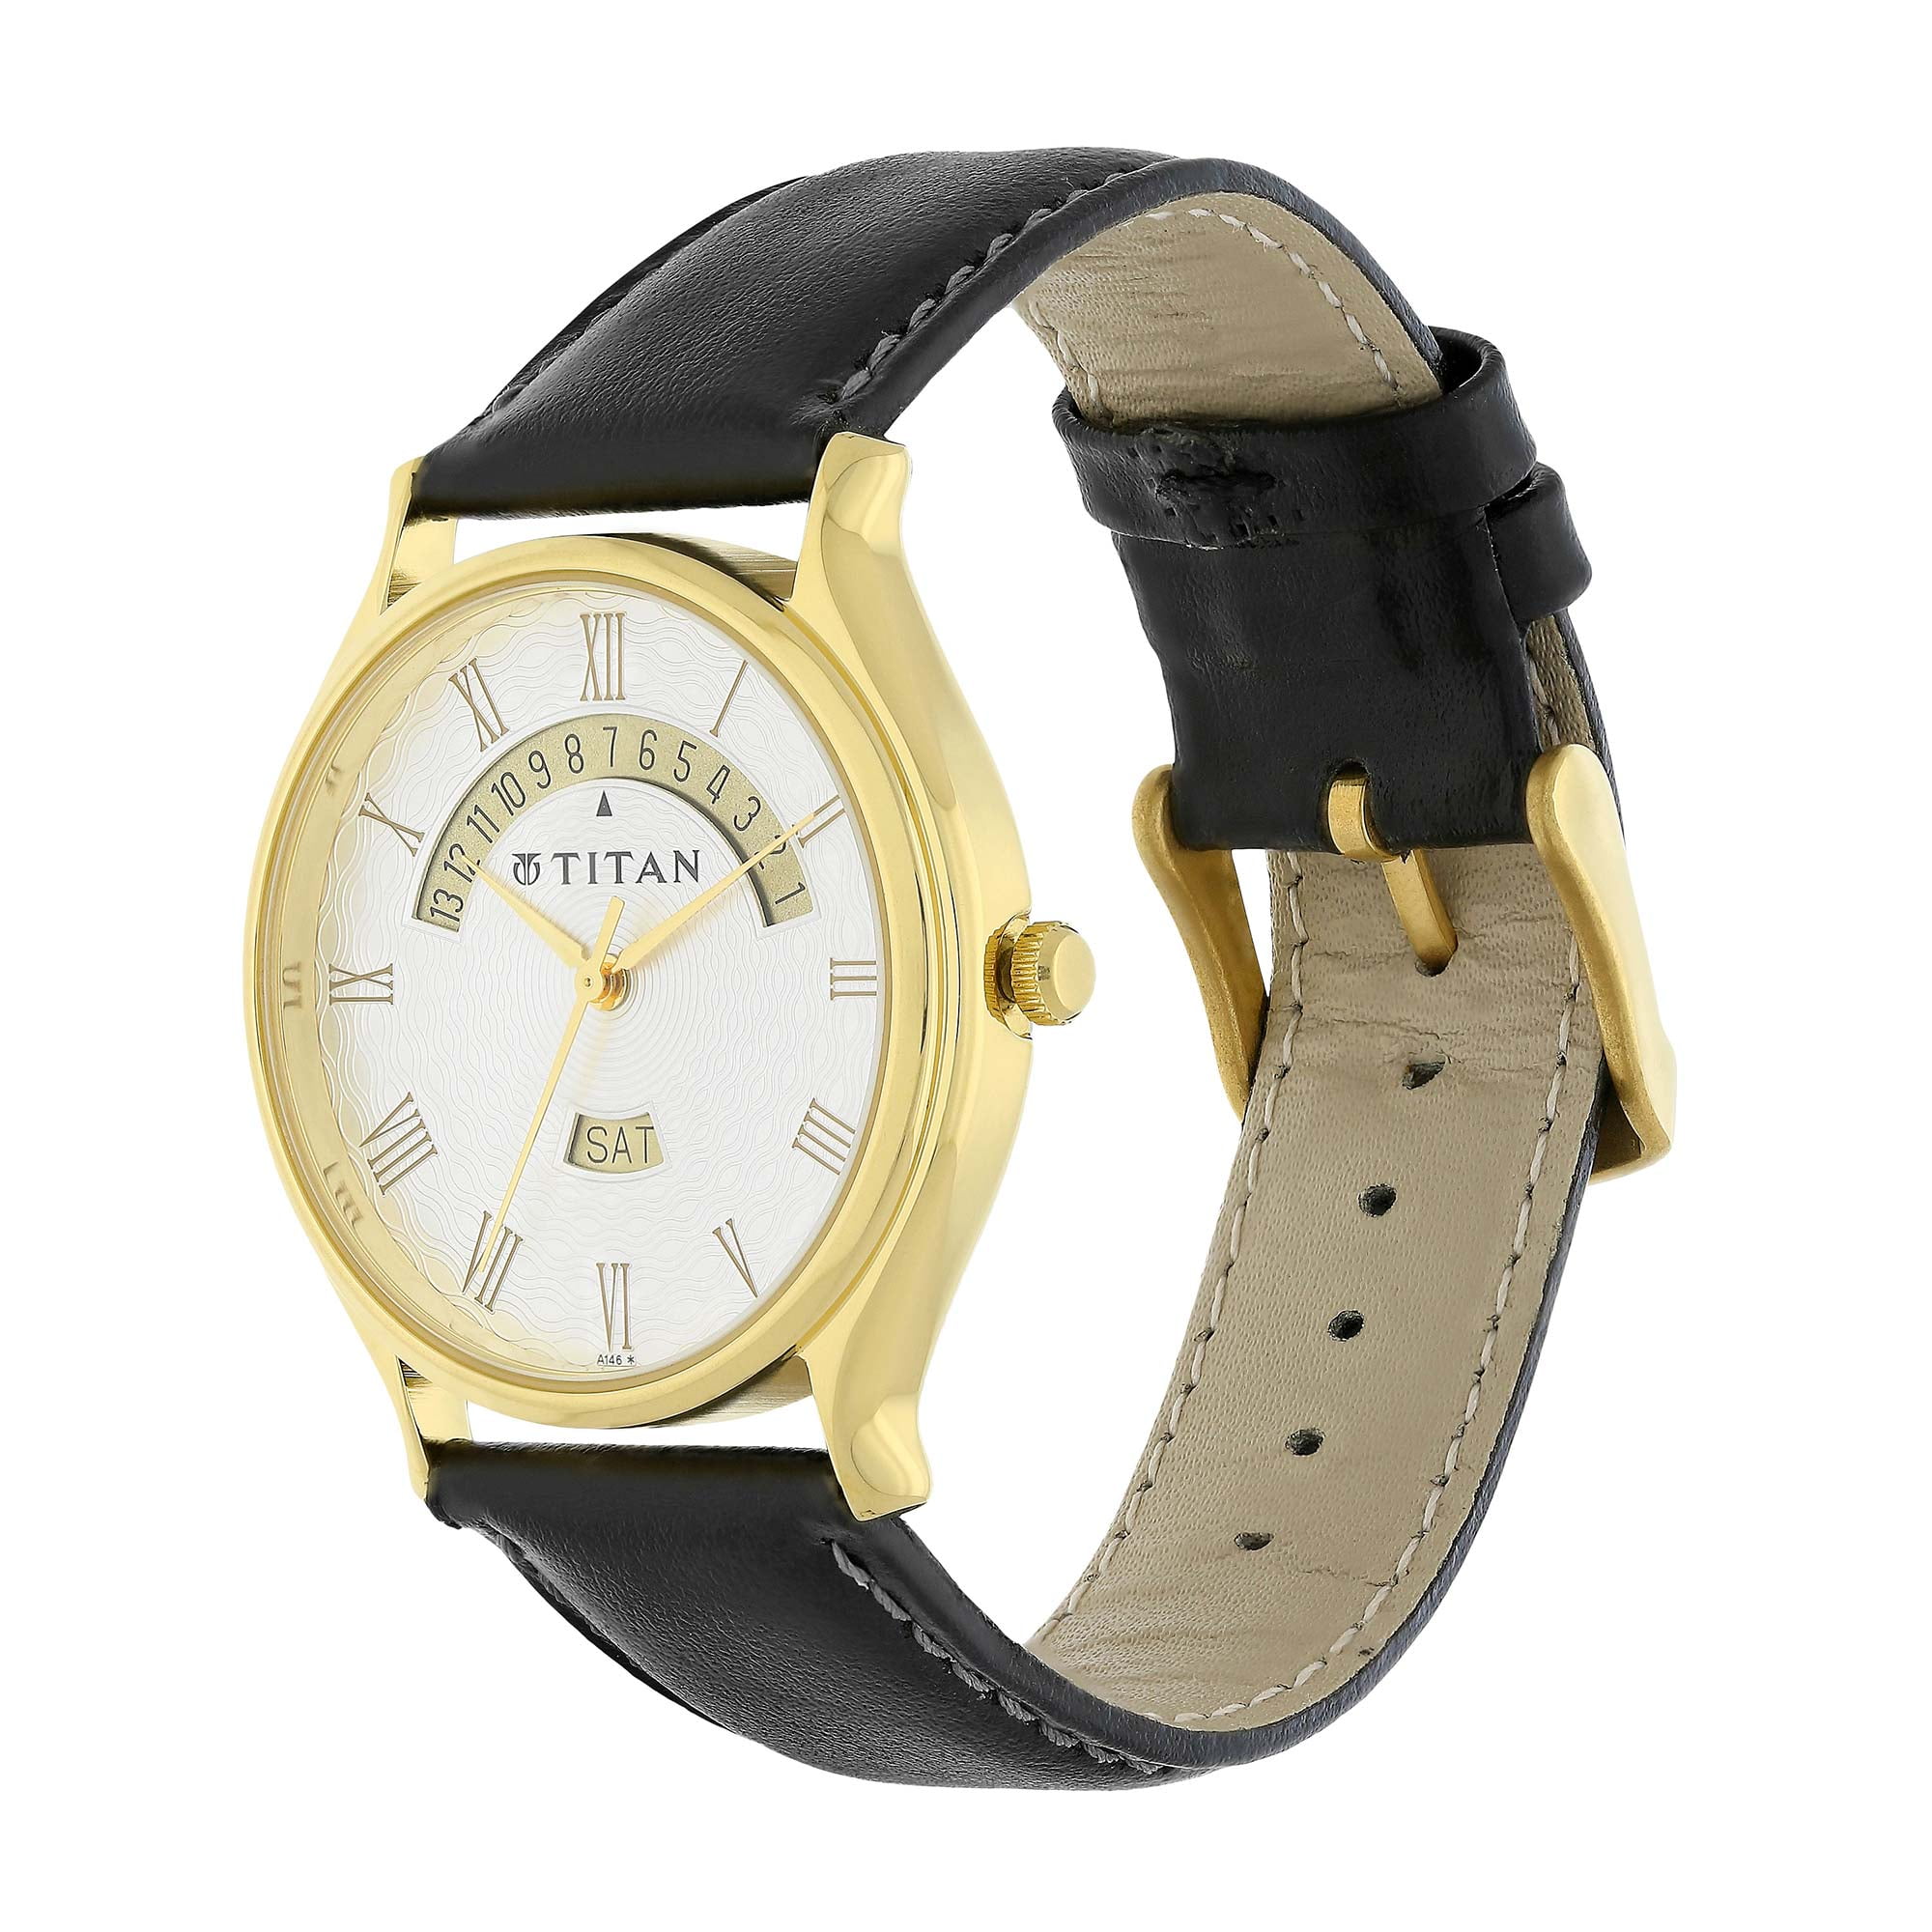 Titan Wrist Watch, Display Type : Analog, Strap Material : Leather